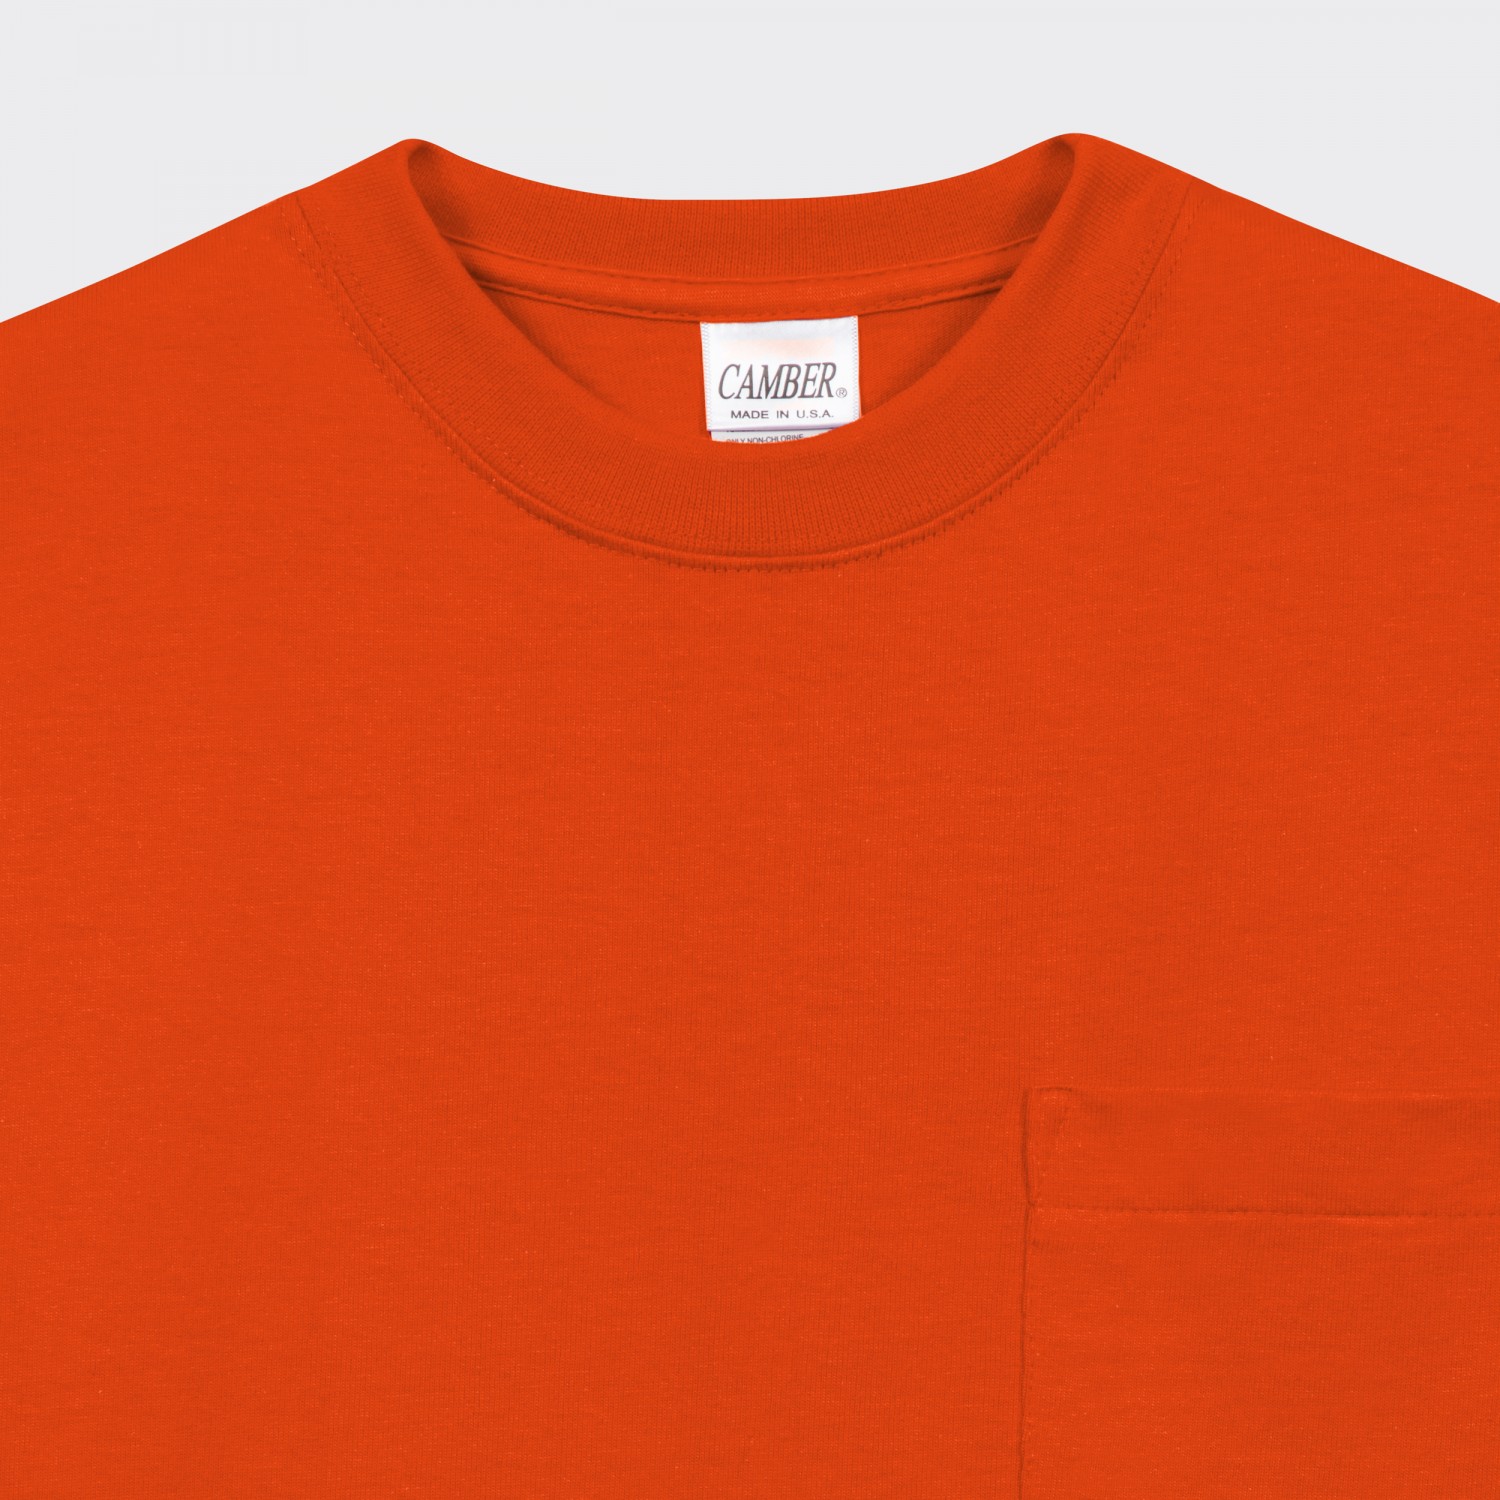 : Pocket USA : Camber T-shirt Orange